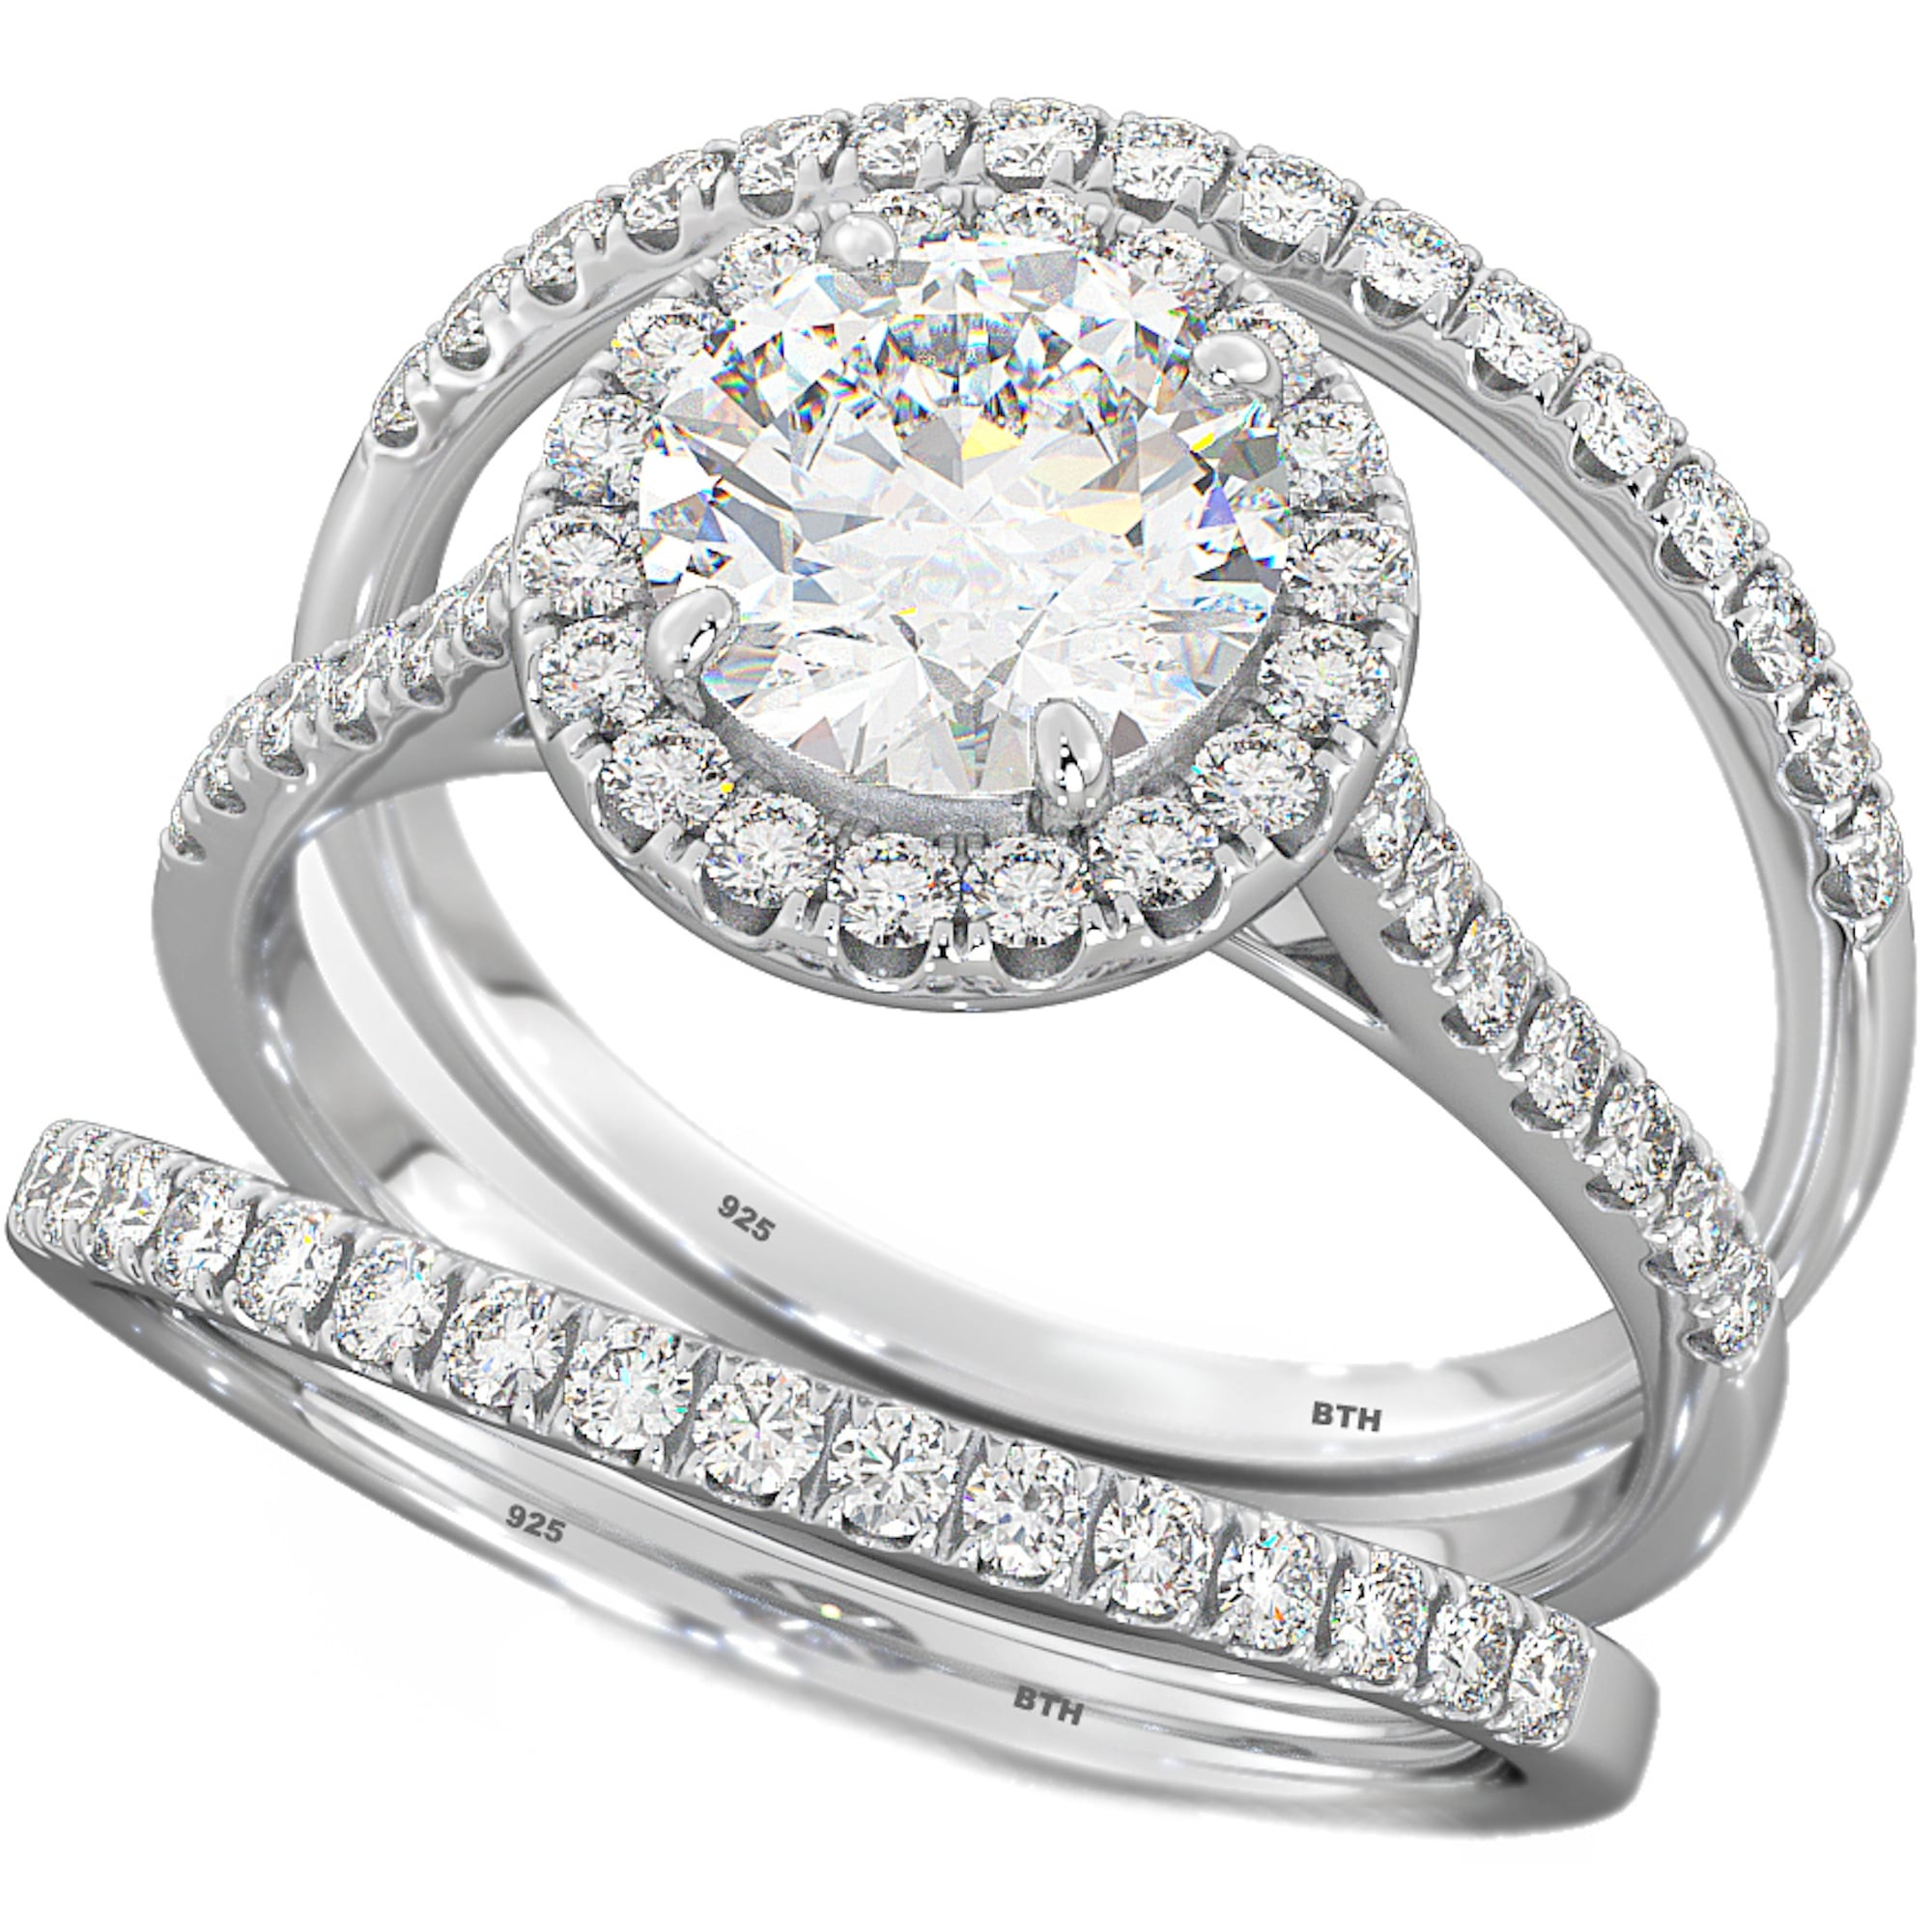 Cz Wedding Ring Sets
 3 Pieces Round Cut Wedding Engagement Bridal Ring Set